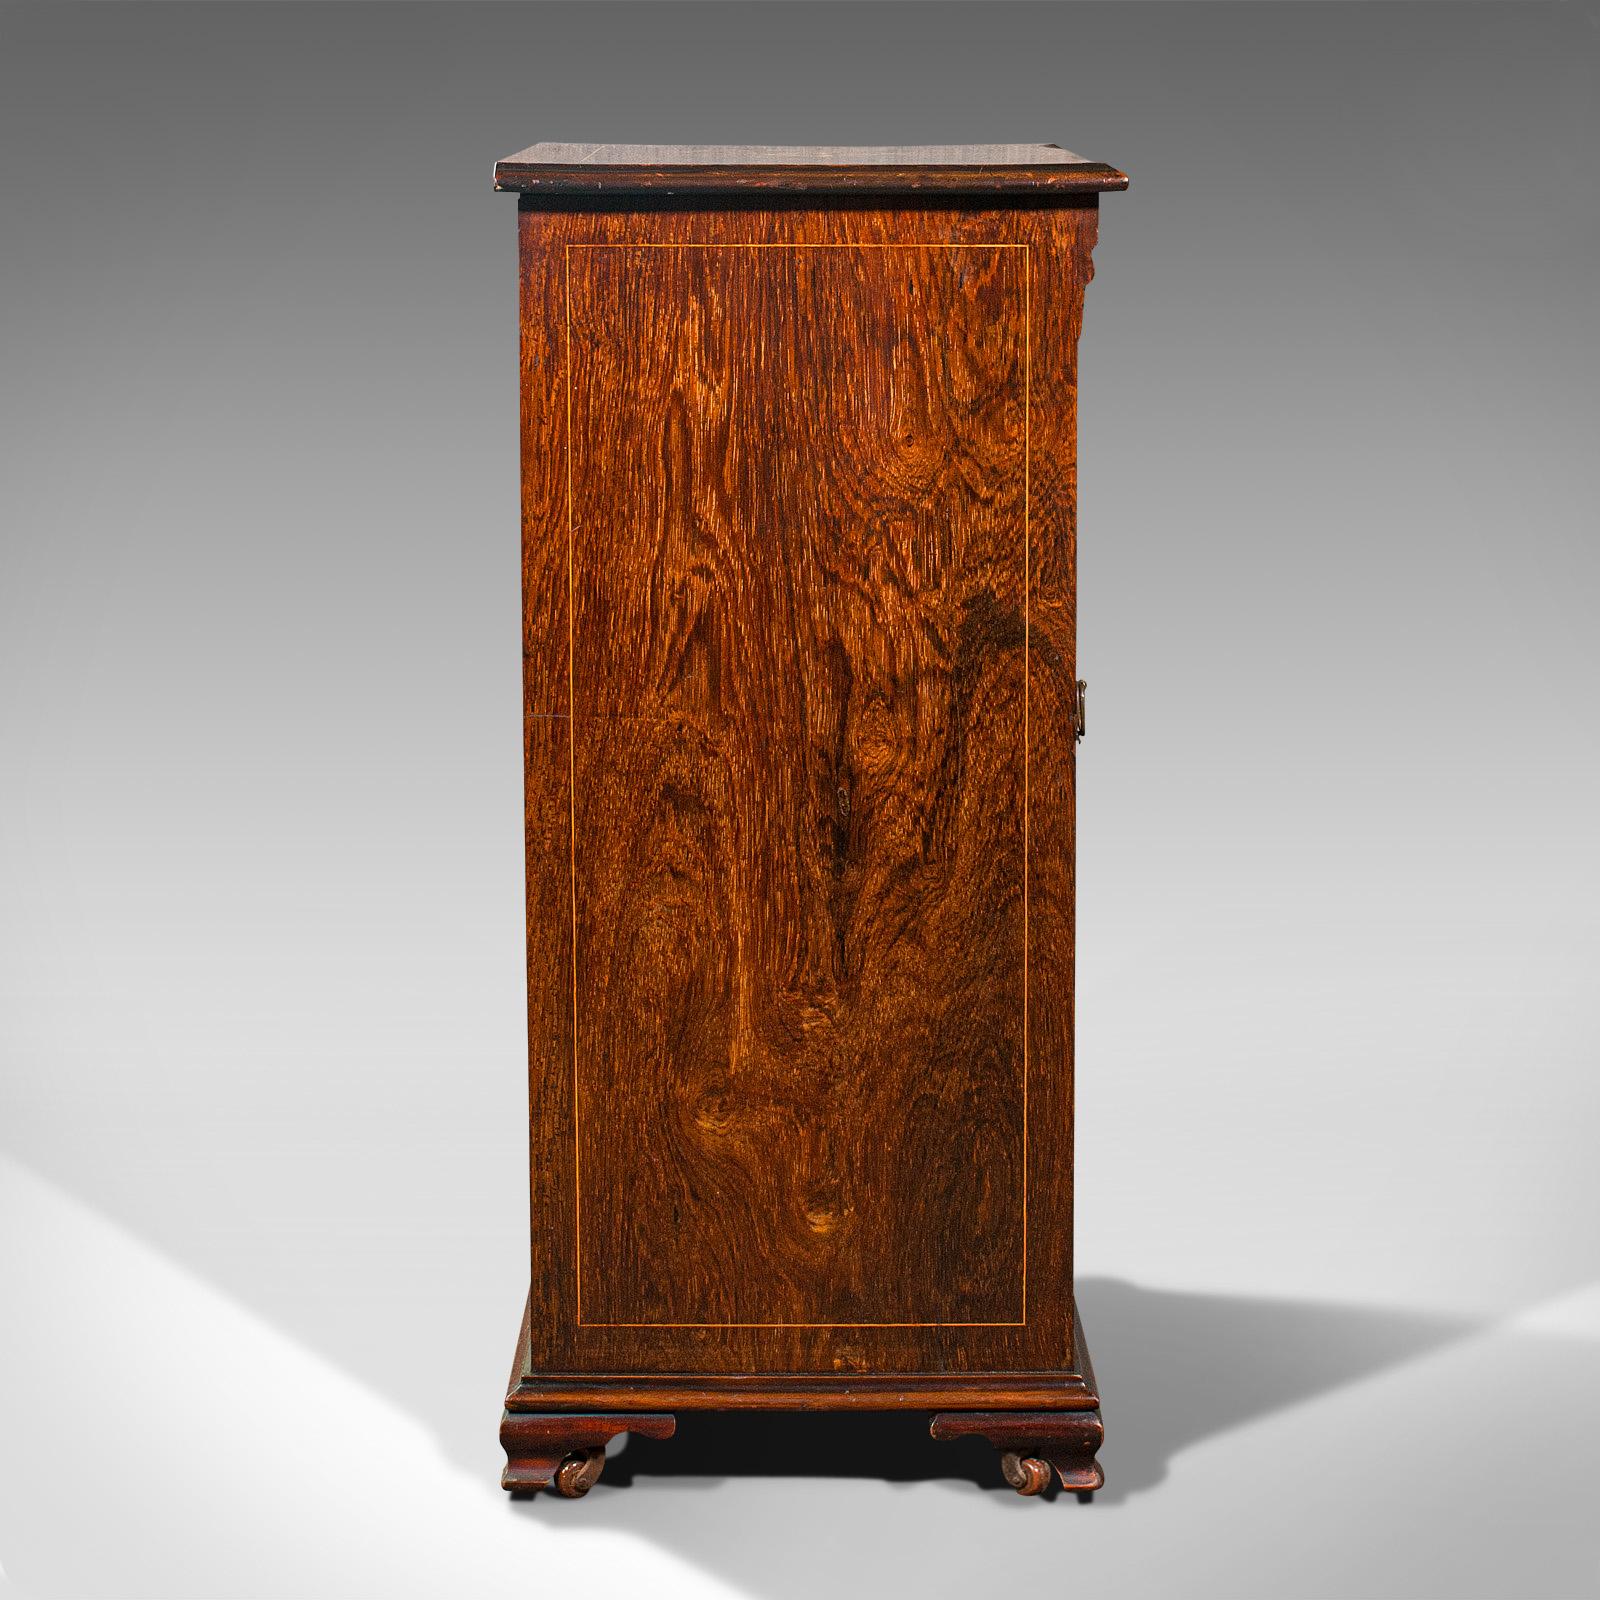 British Antique Music Cabinet, English, Rosewood, Display Case, Inlay, Victorian, C.1870